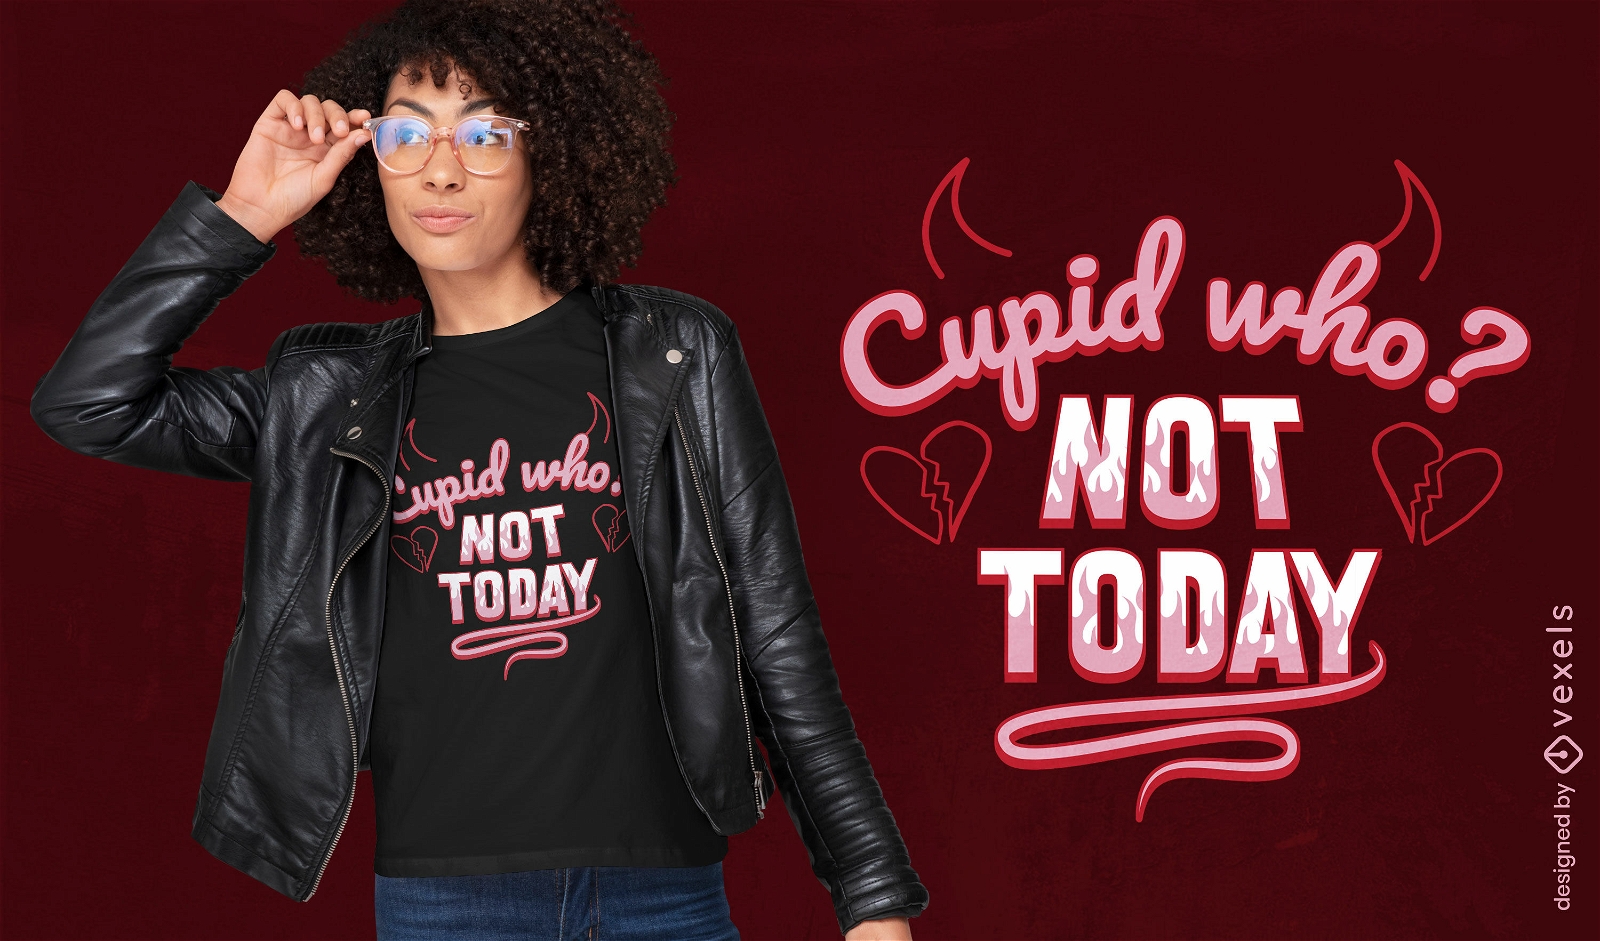 Sassy anti-Cupid quote t-shirt design